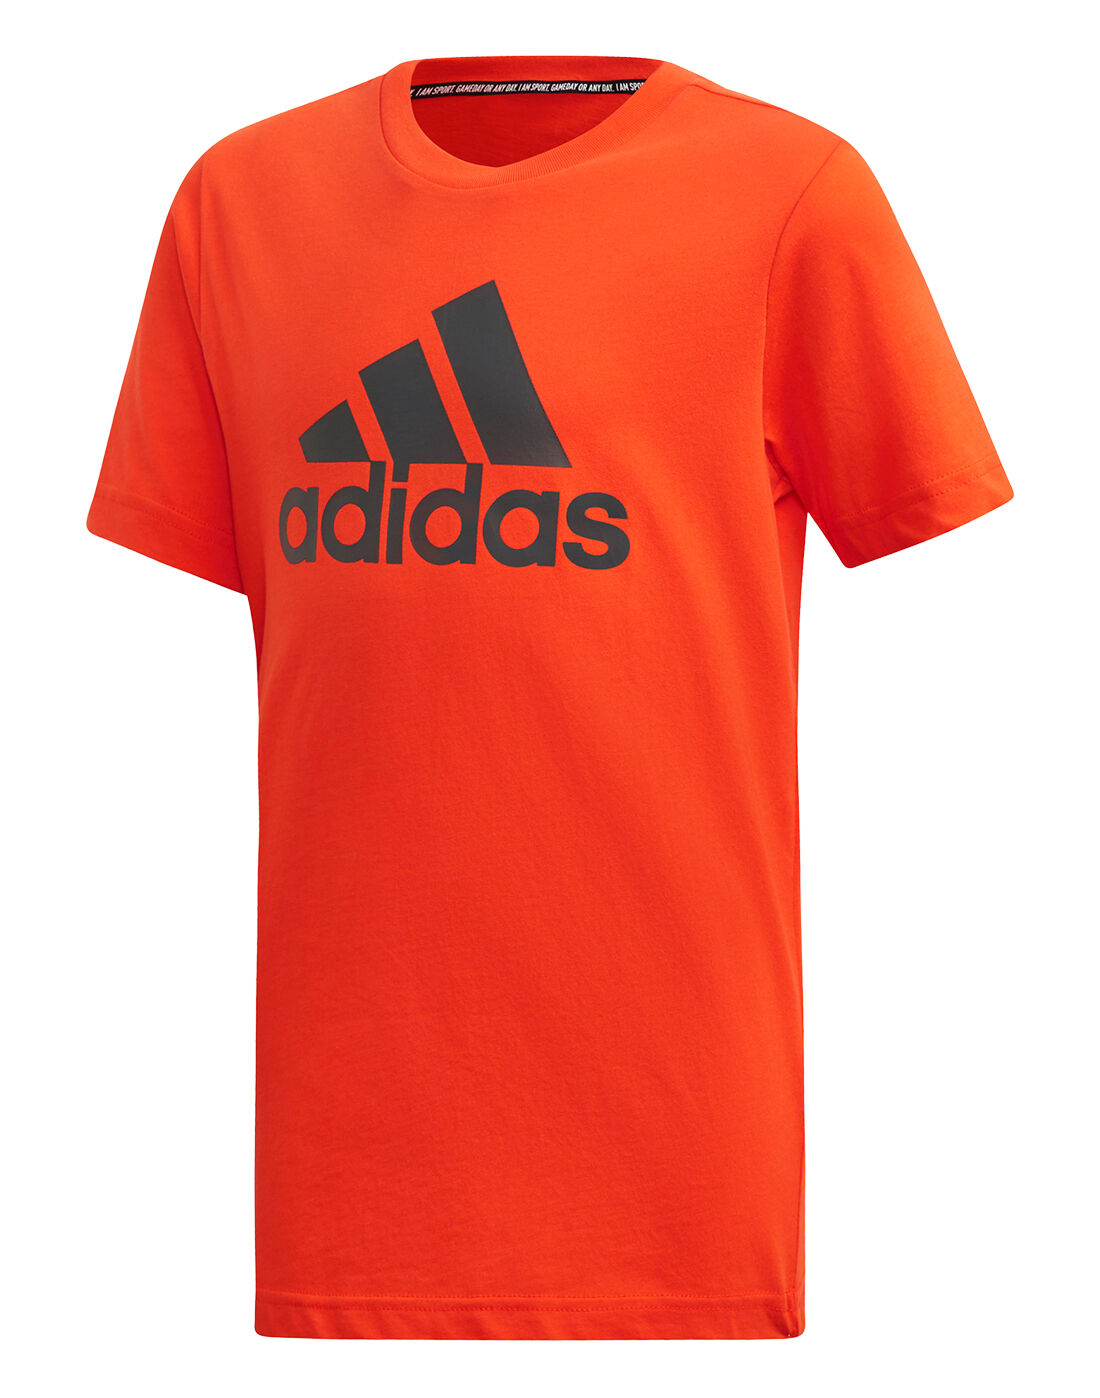 Boy's Orange adidas Logo T-Shirt | Life 